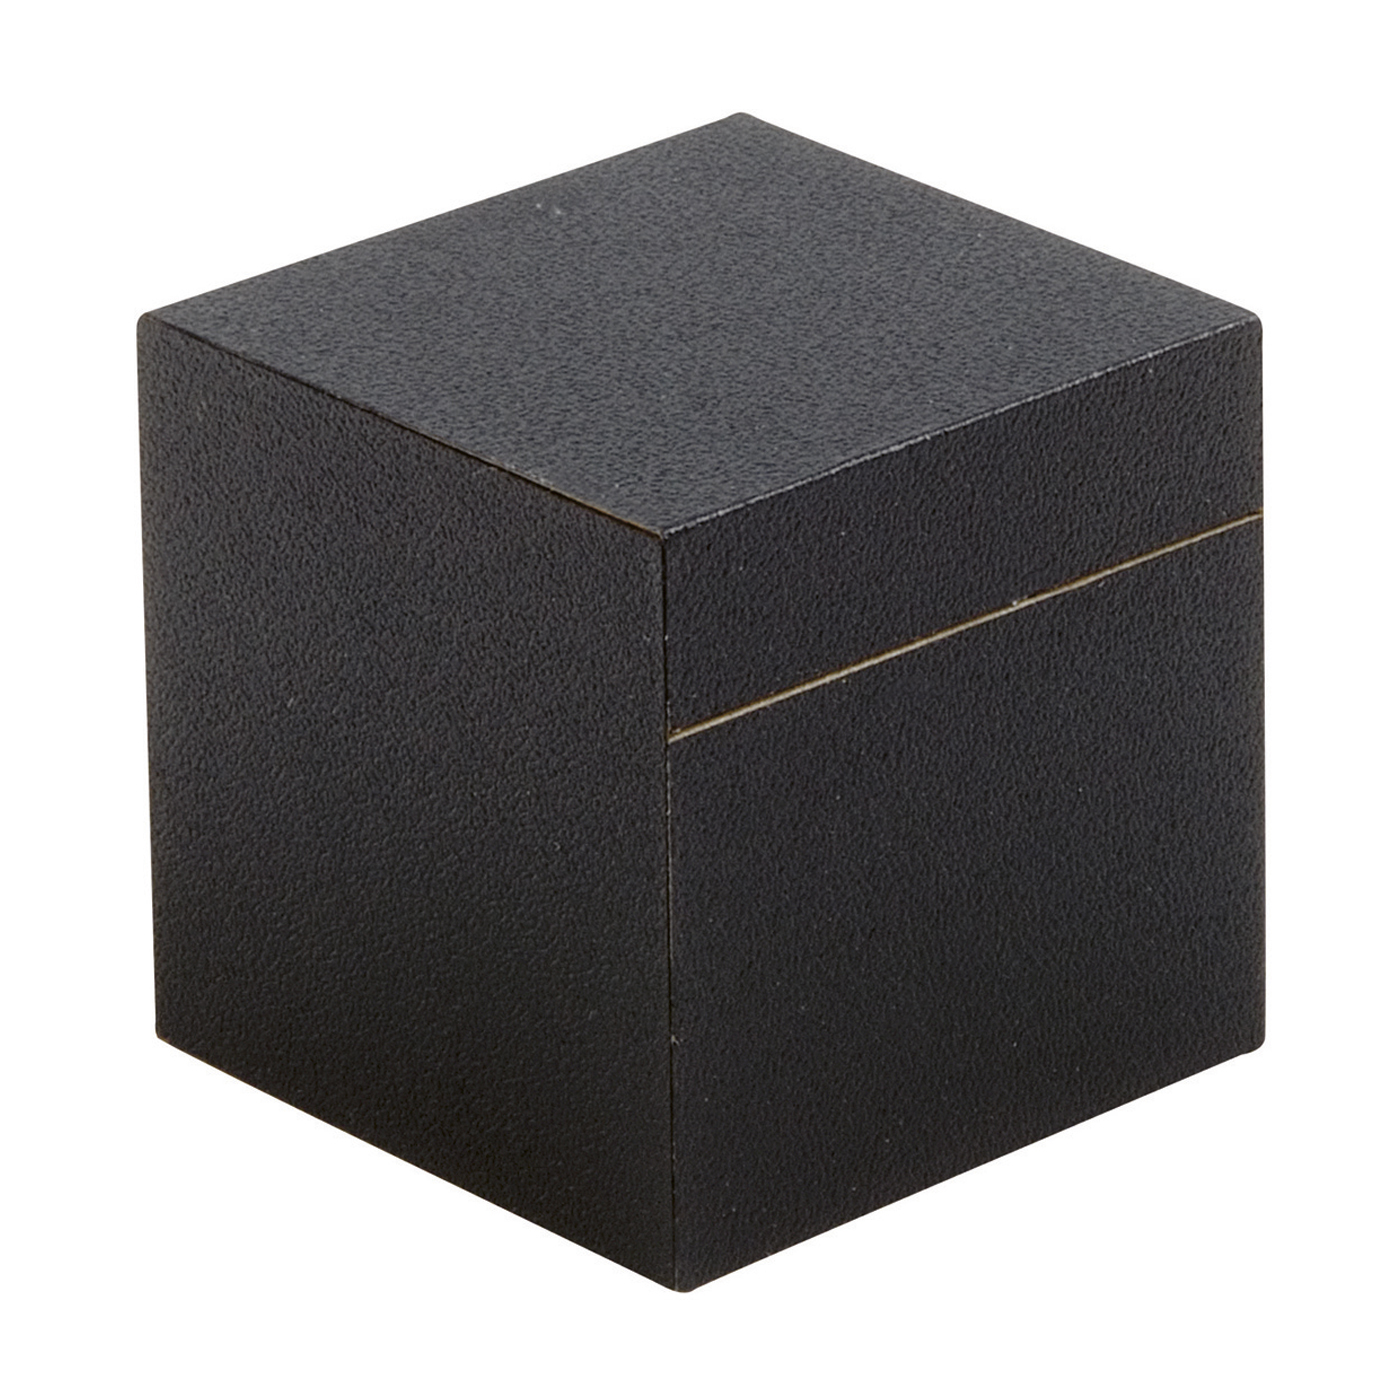 PICA-Design Schmucketui "Blackbox", 37 x 37 x 37 mm - 1 Stück